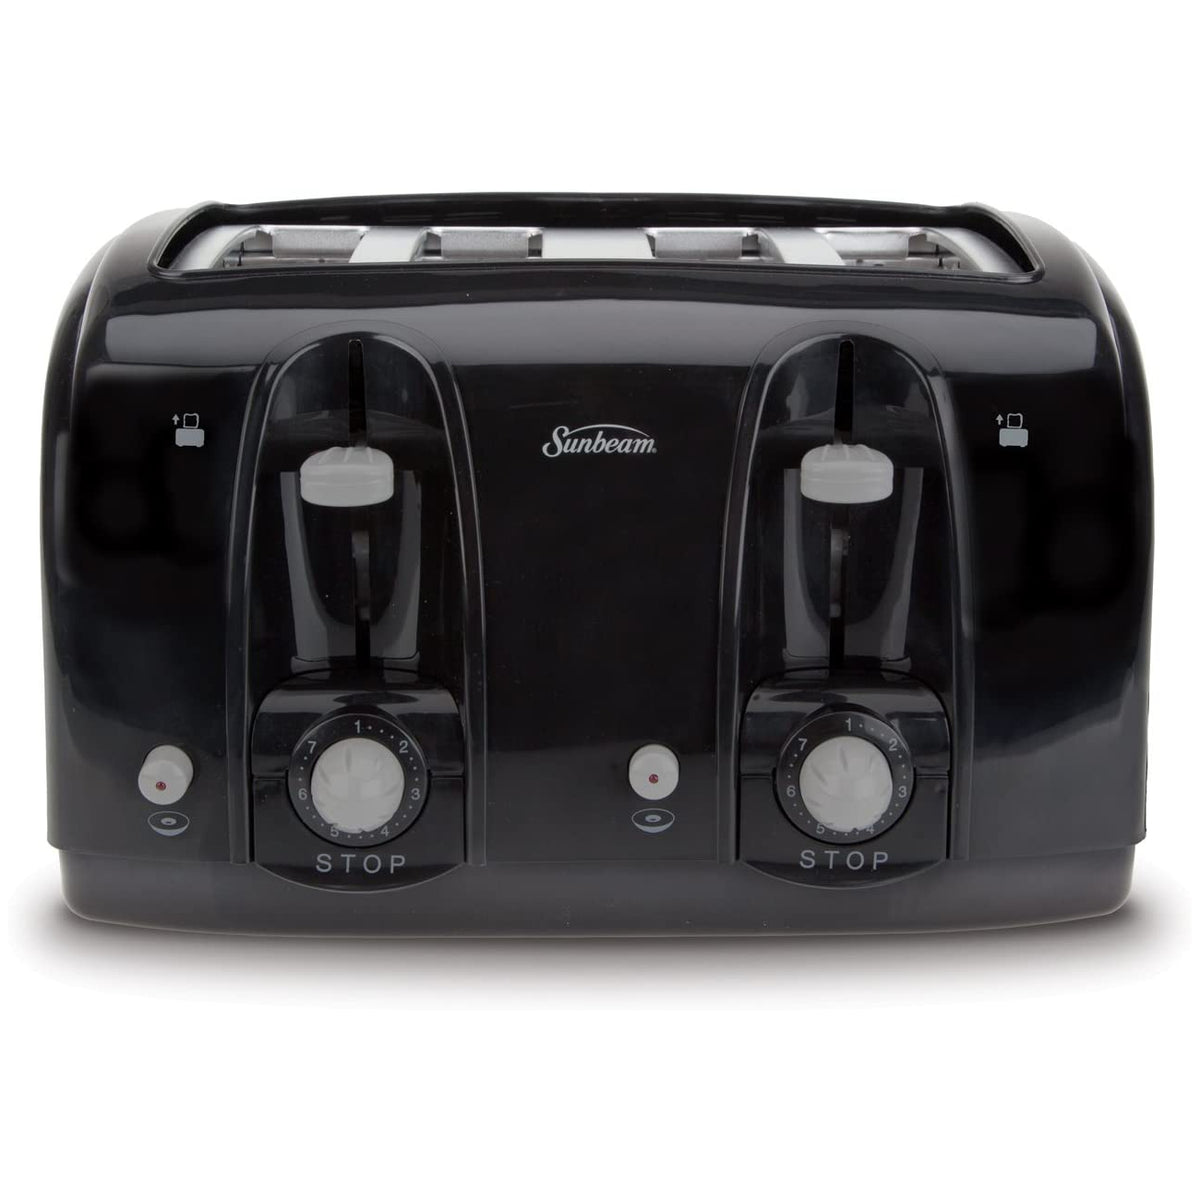 Sunbeam 003911-100-000 Wide Slot Electronic Toaster, 4-Slice, Black